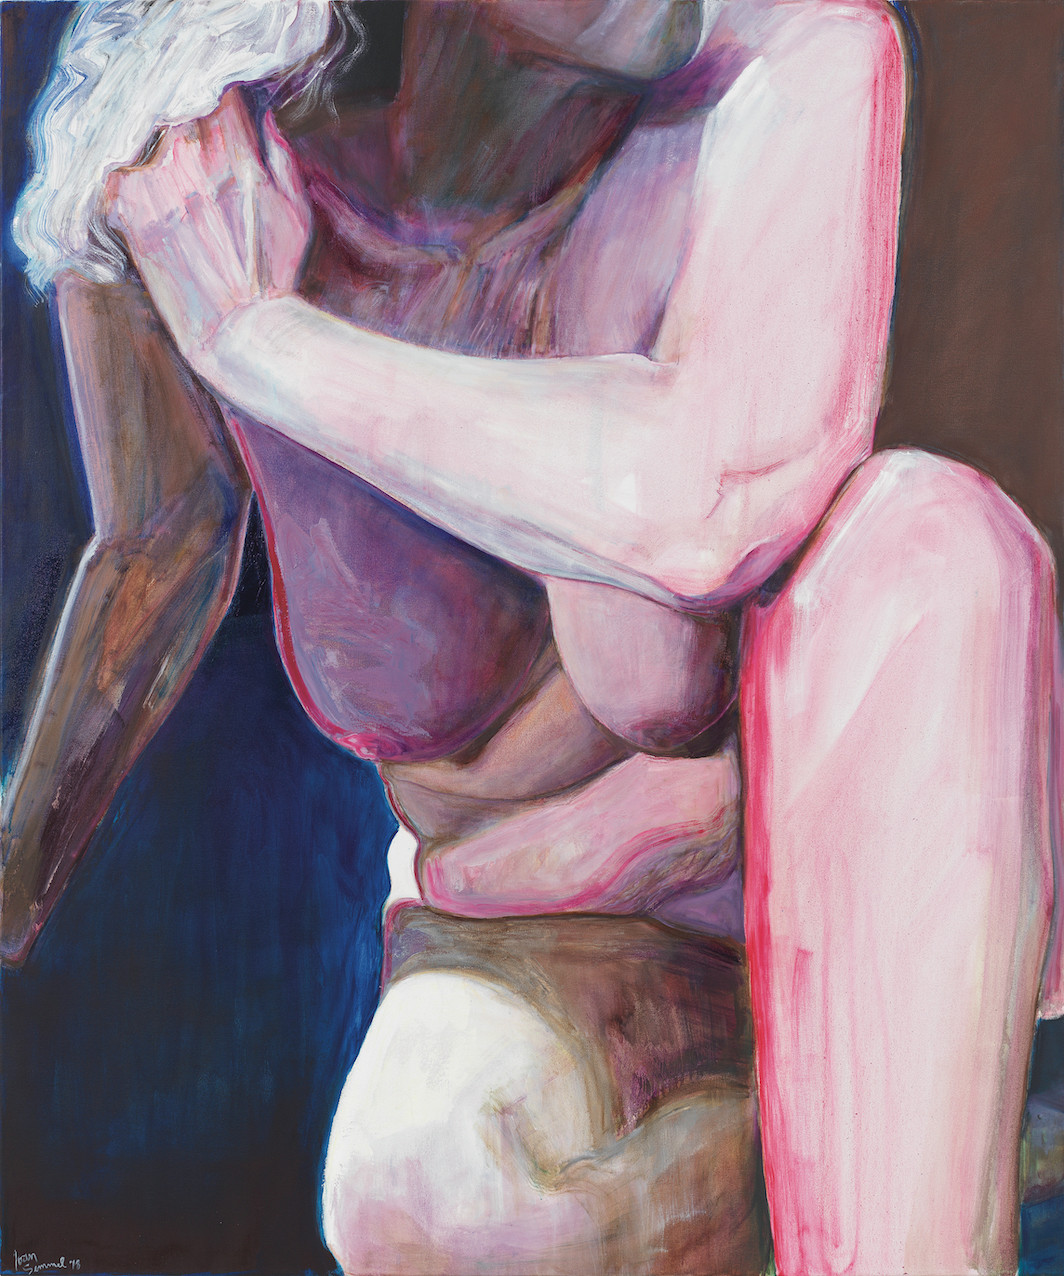 Joan Semmel, Red Line, 2018, oil on canvas, 72 × 60". © Joan Semmel/Artists Rights Society (ARS), New York